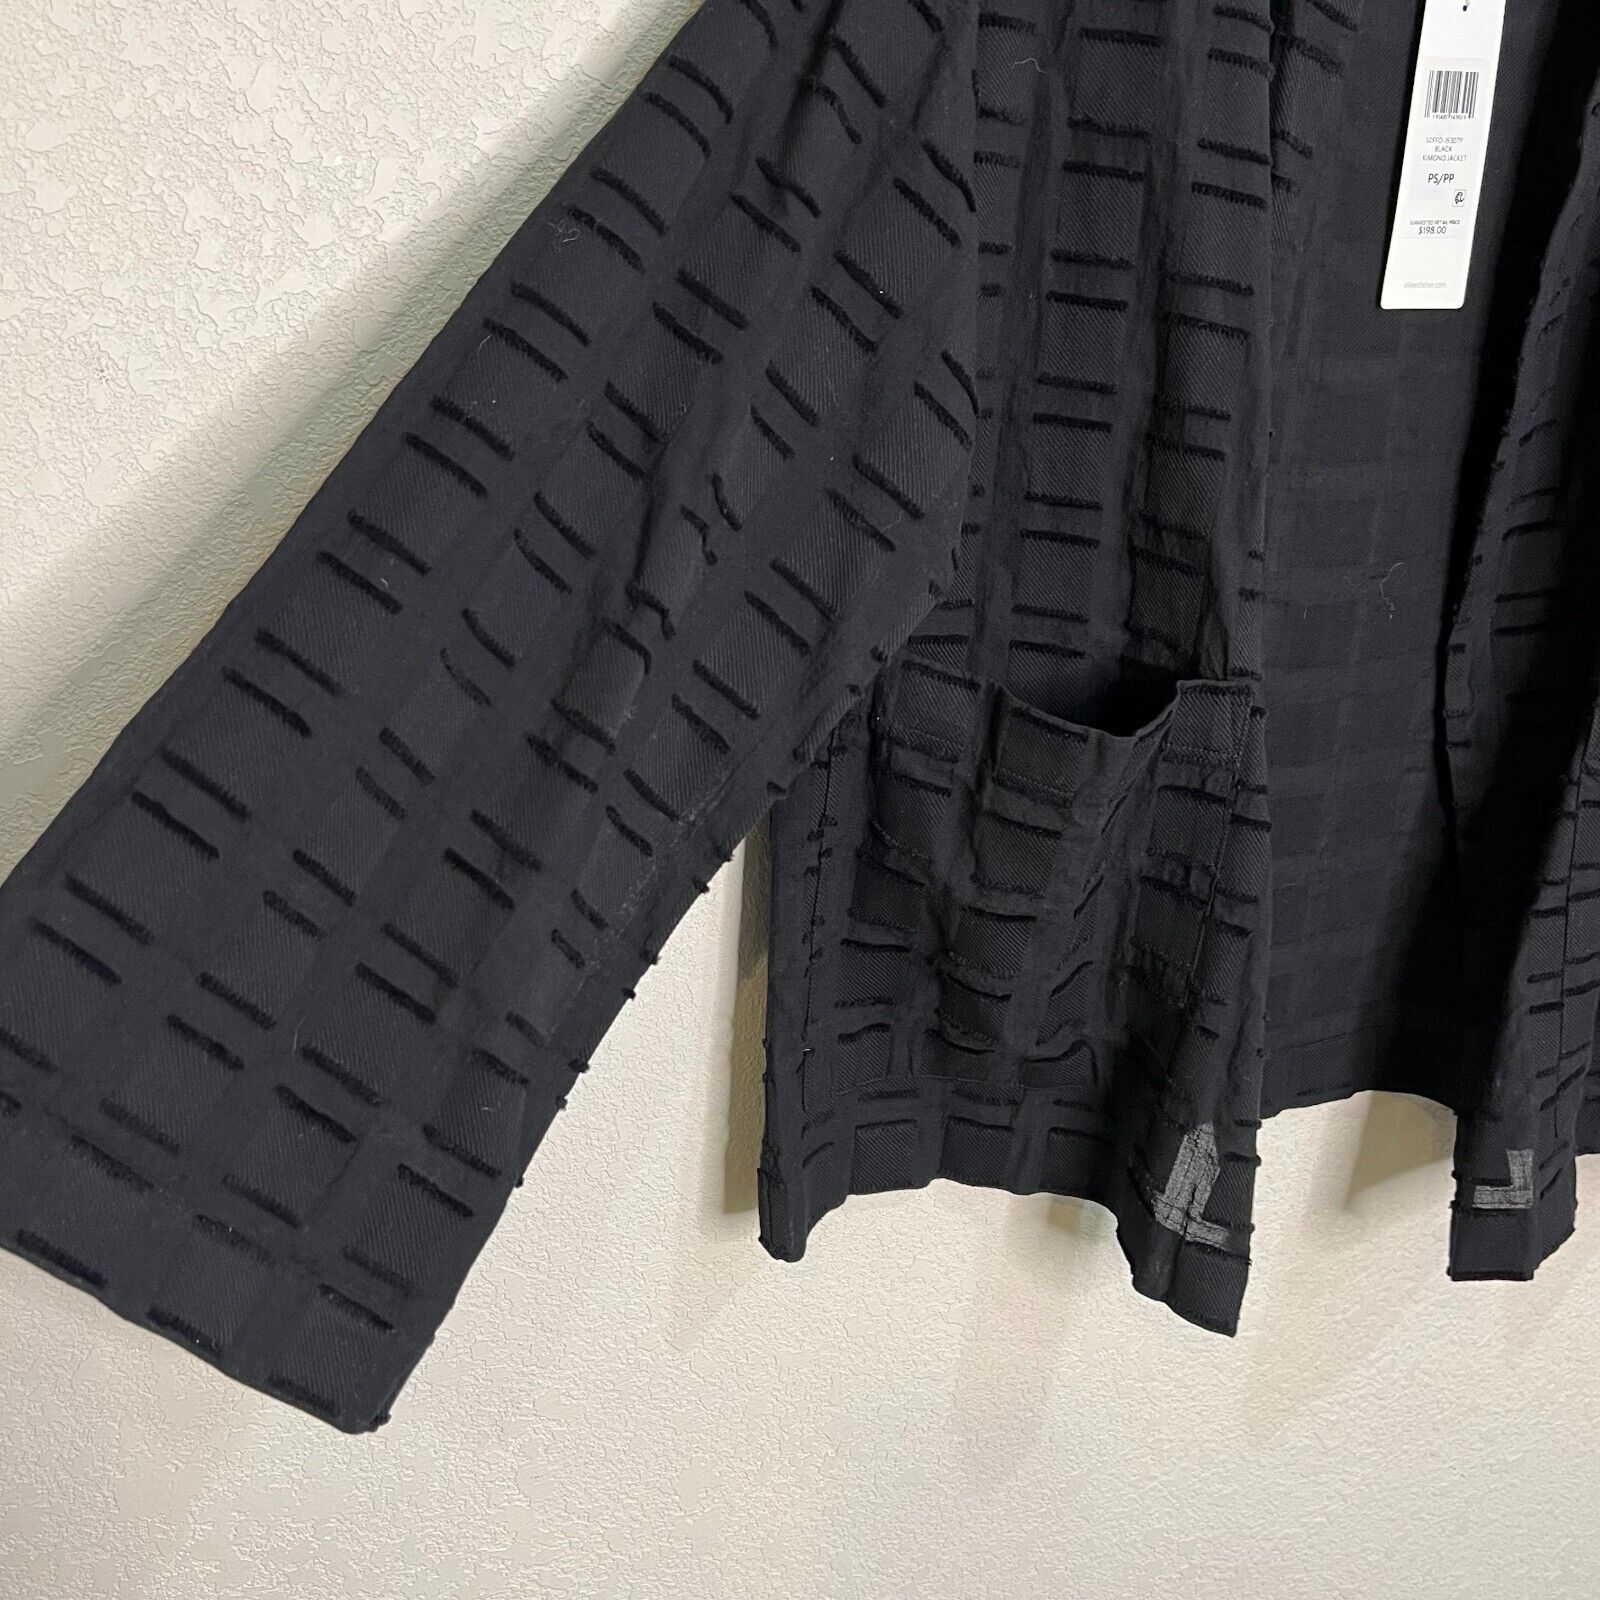 Eileen Fisher Black Soffo Kimono Jacket Topper Size Small Petite NEW $198